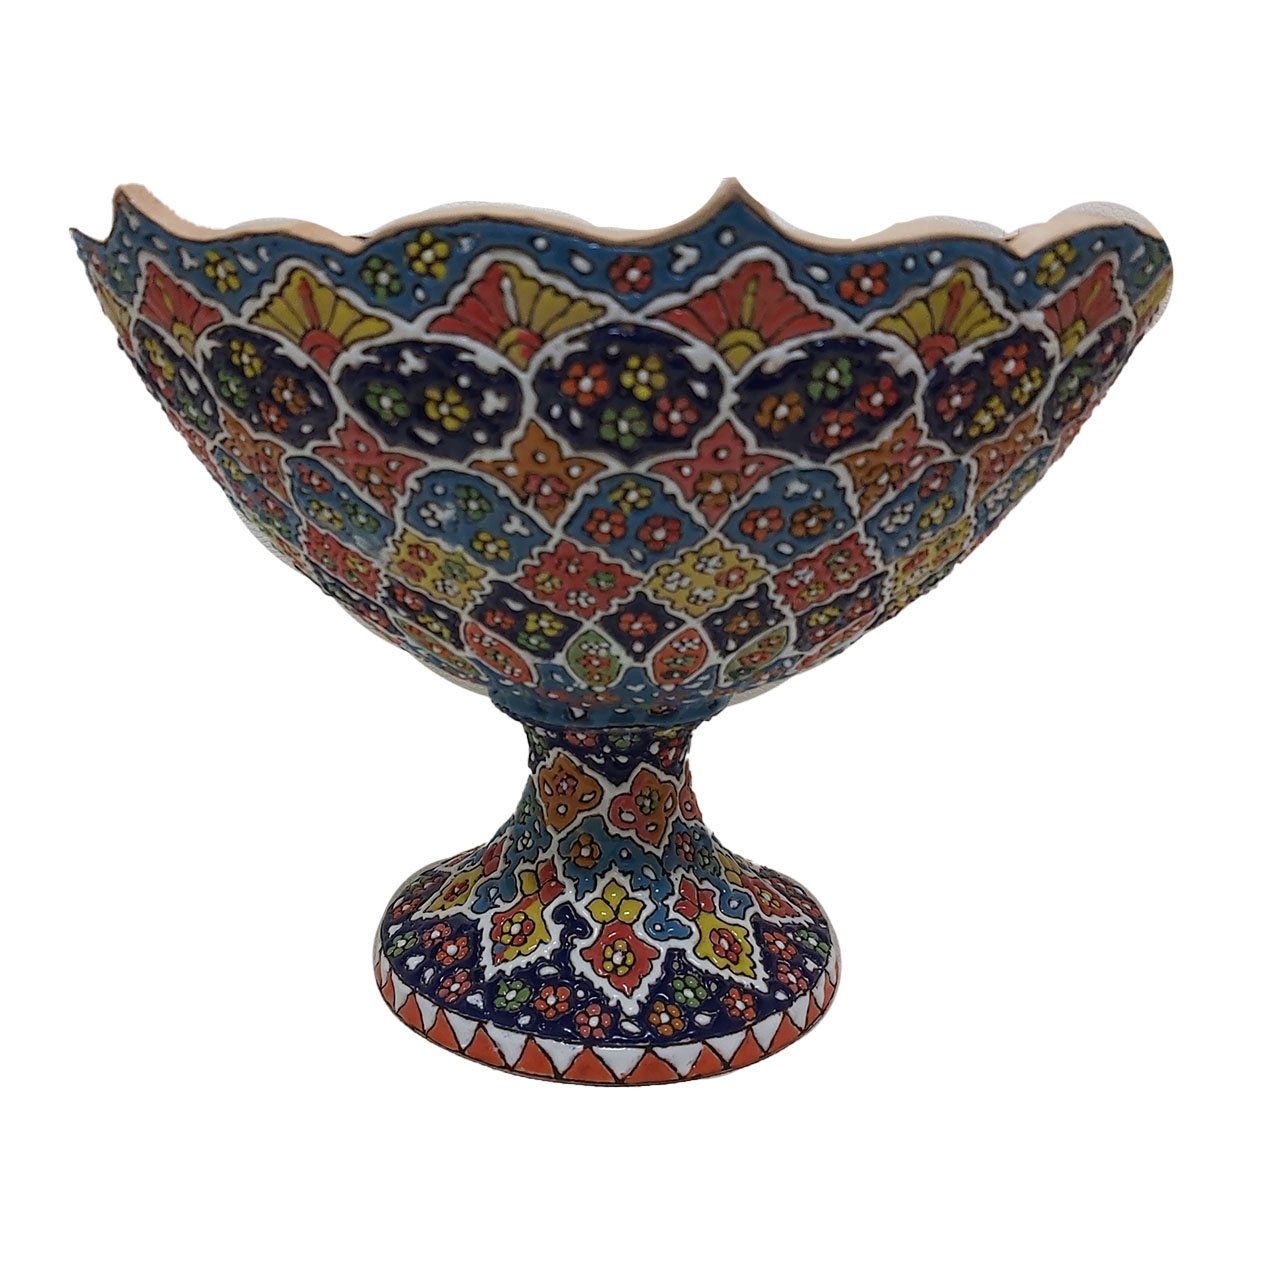 Enamel Handicraft pottery bowl code 00004,Preise für Emaille,Preis für Emailleschale,Preis für Emaille-Teller,Preise für Emaille-Glas